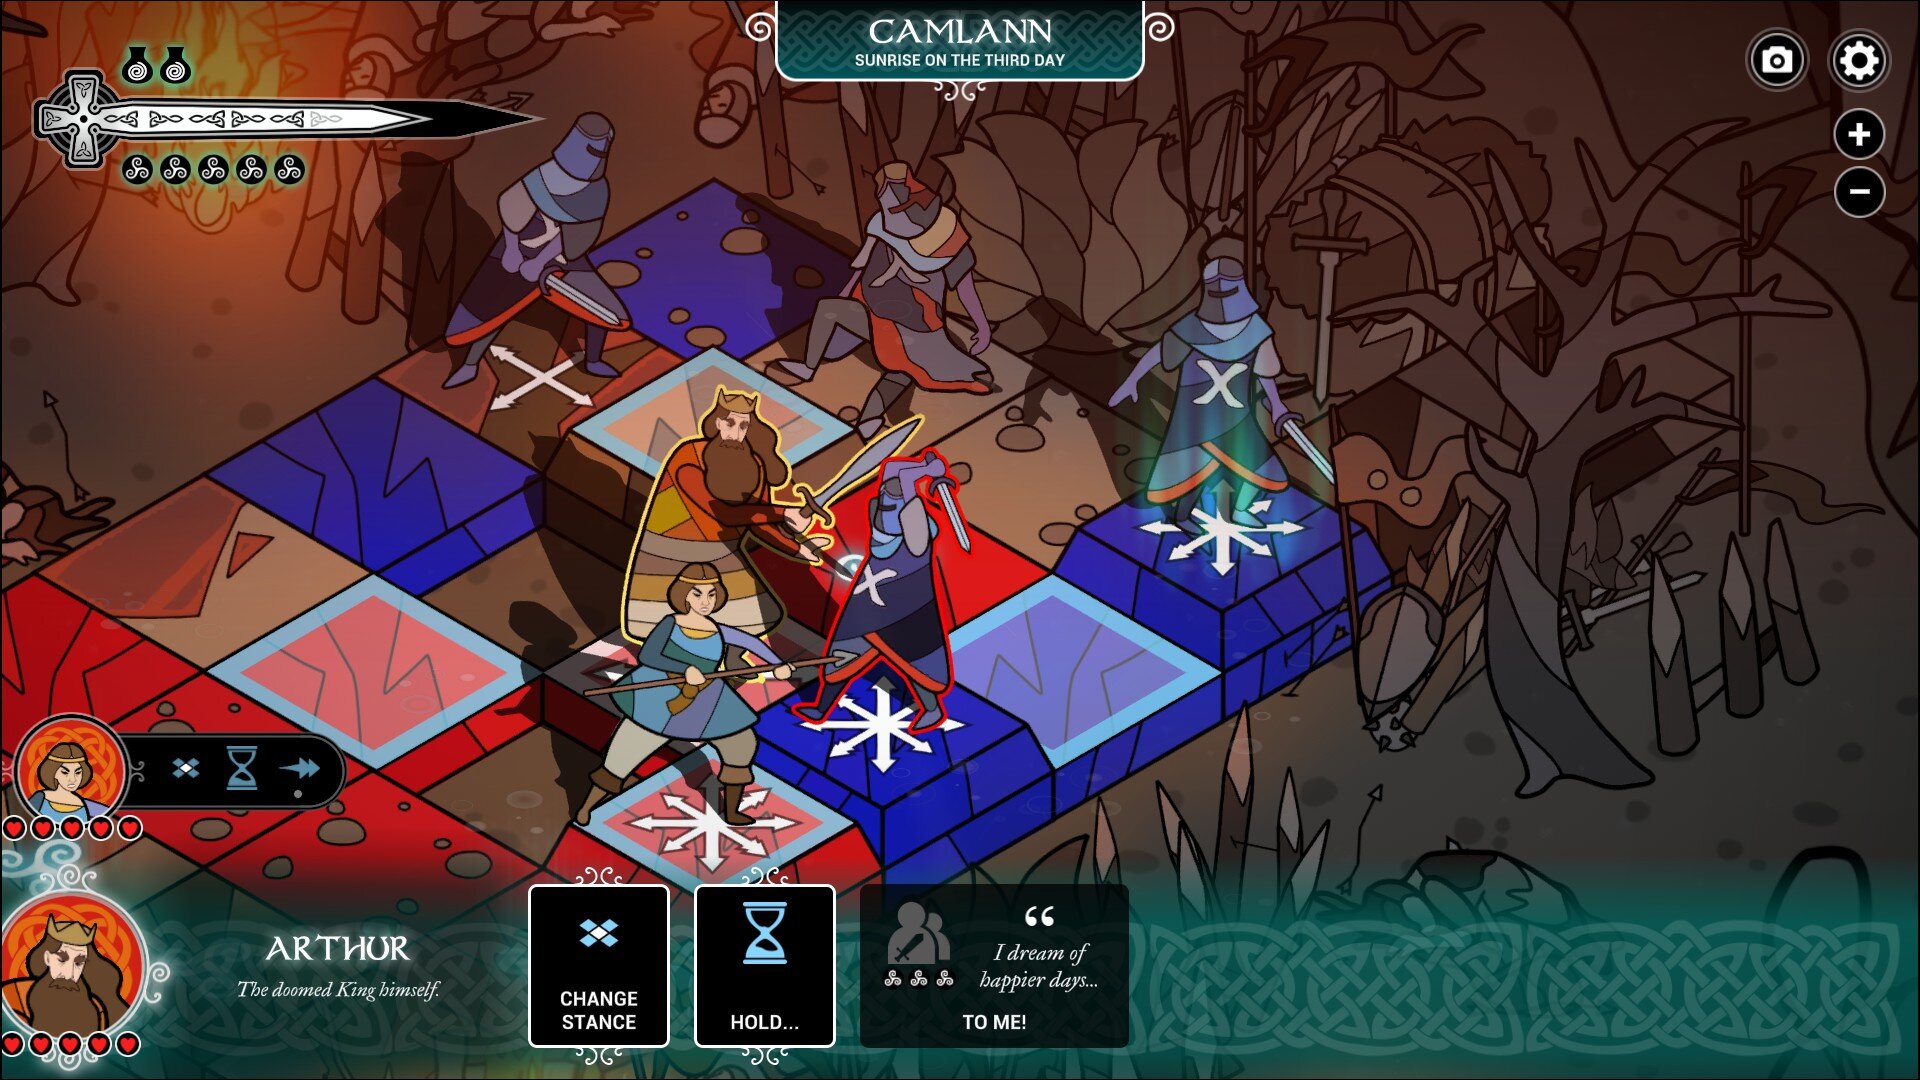 Pendragon game screenshot, battle